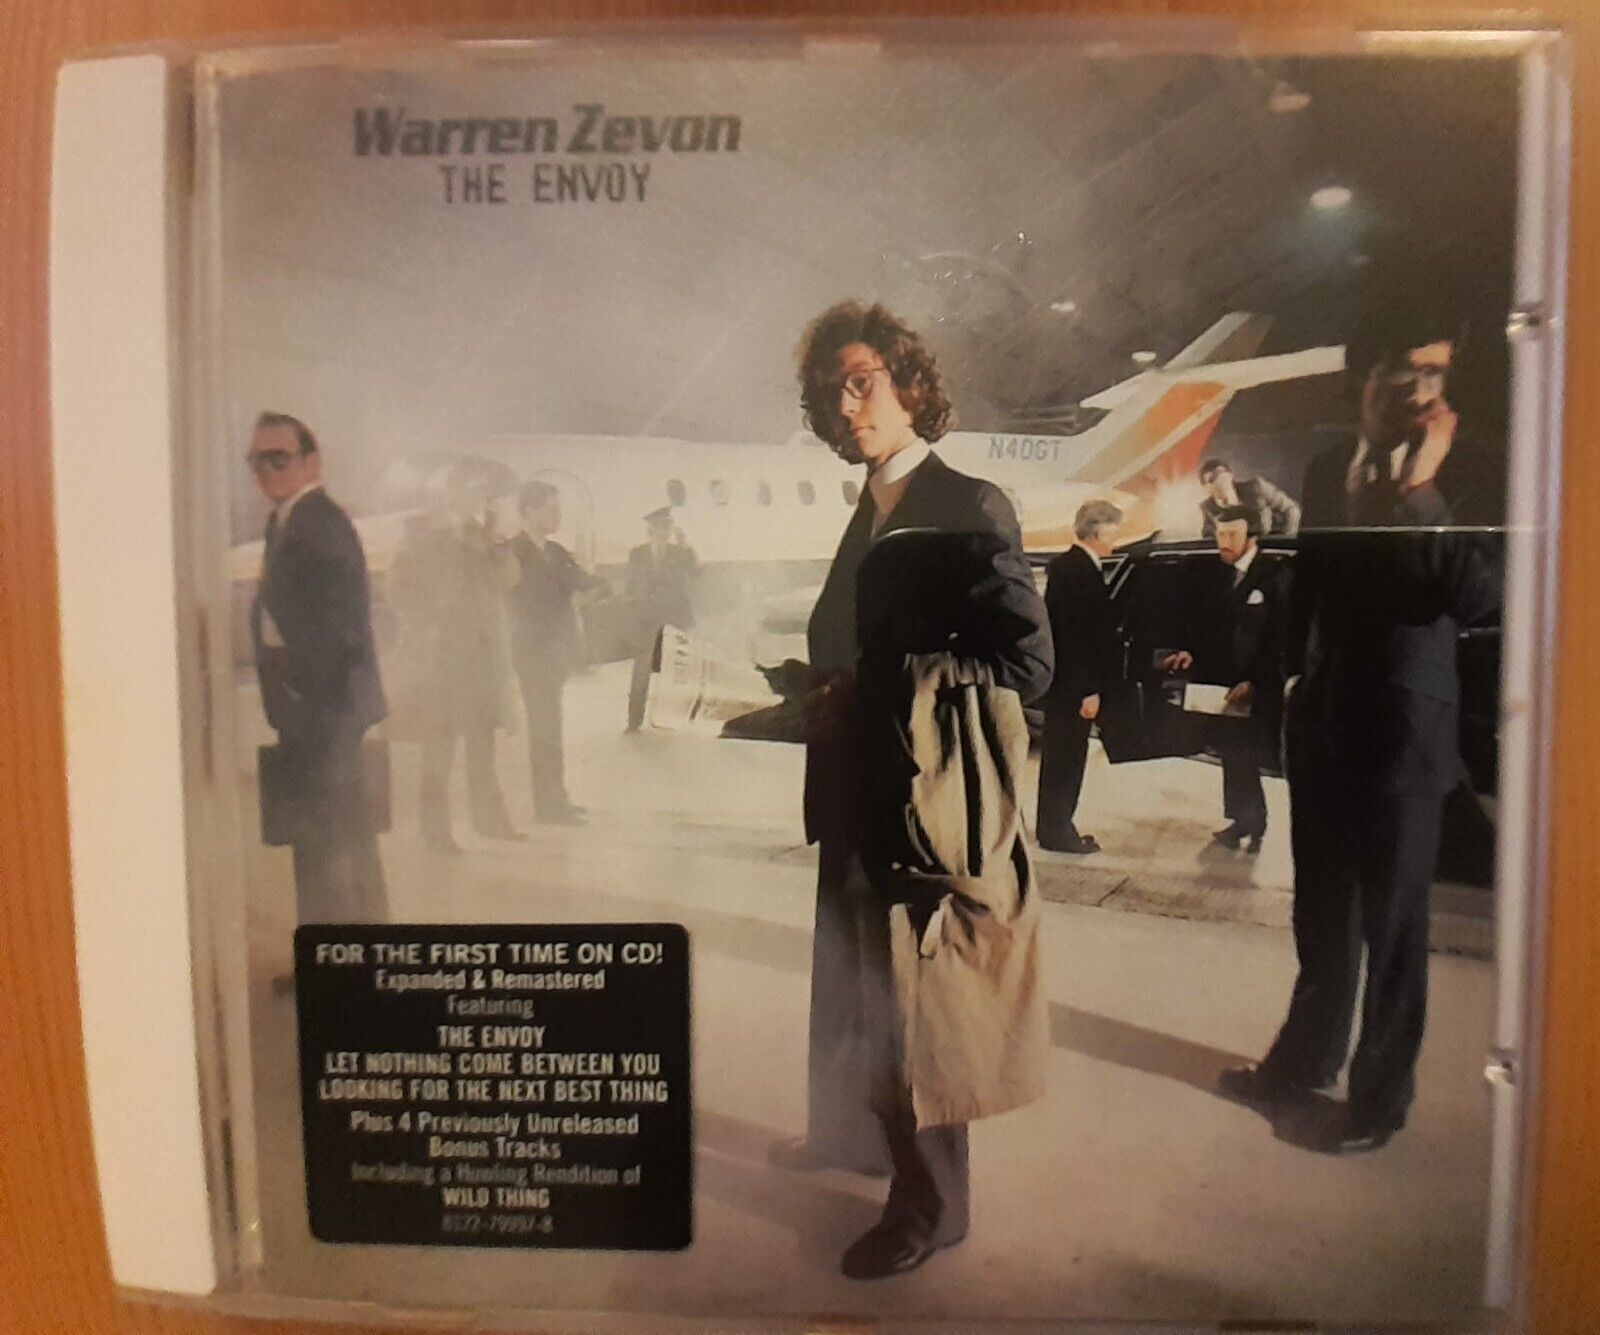 Extremely Rare: Warren Zerron :The Envoy (Expanded & Remastered) CD Album